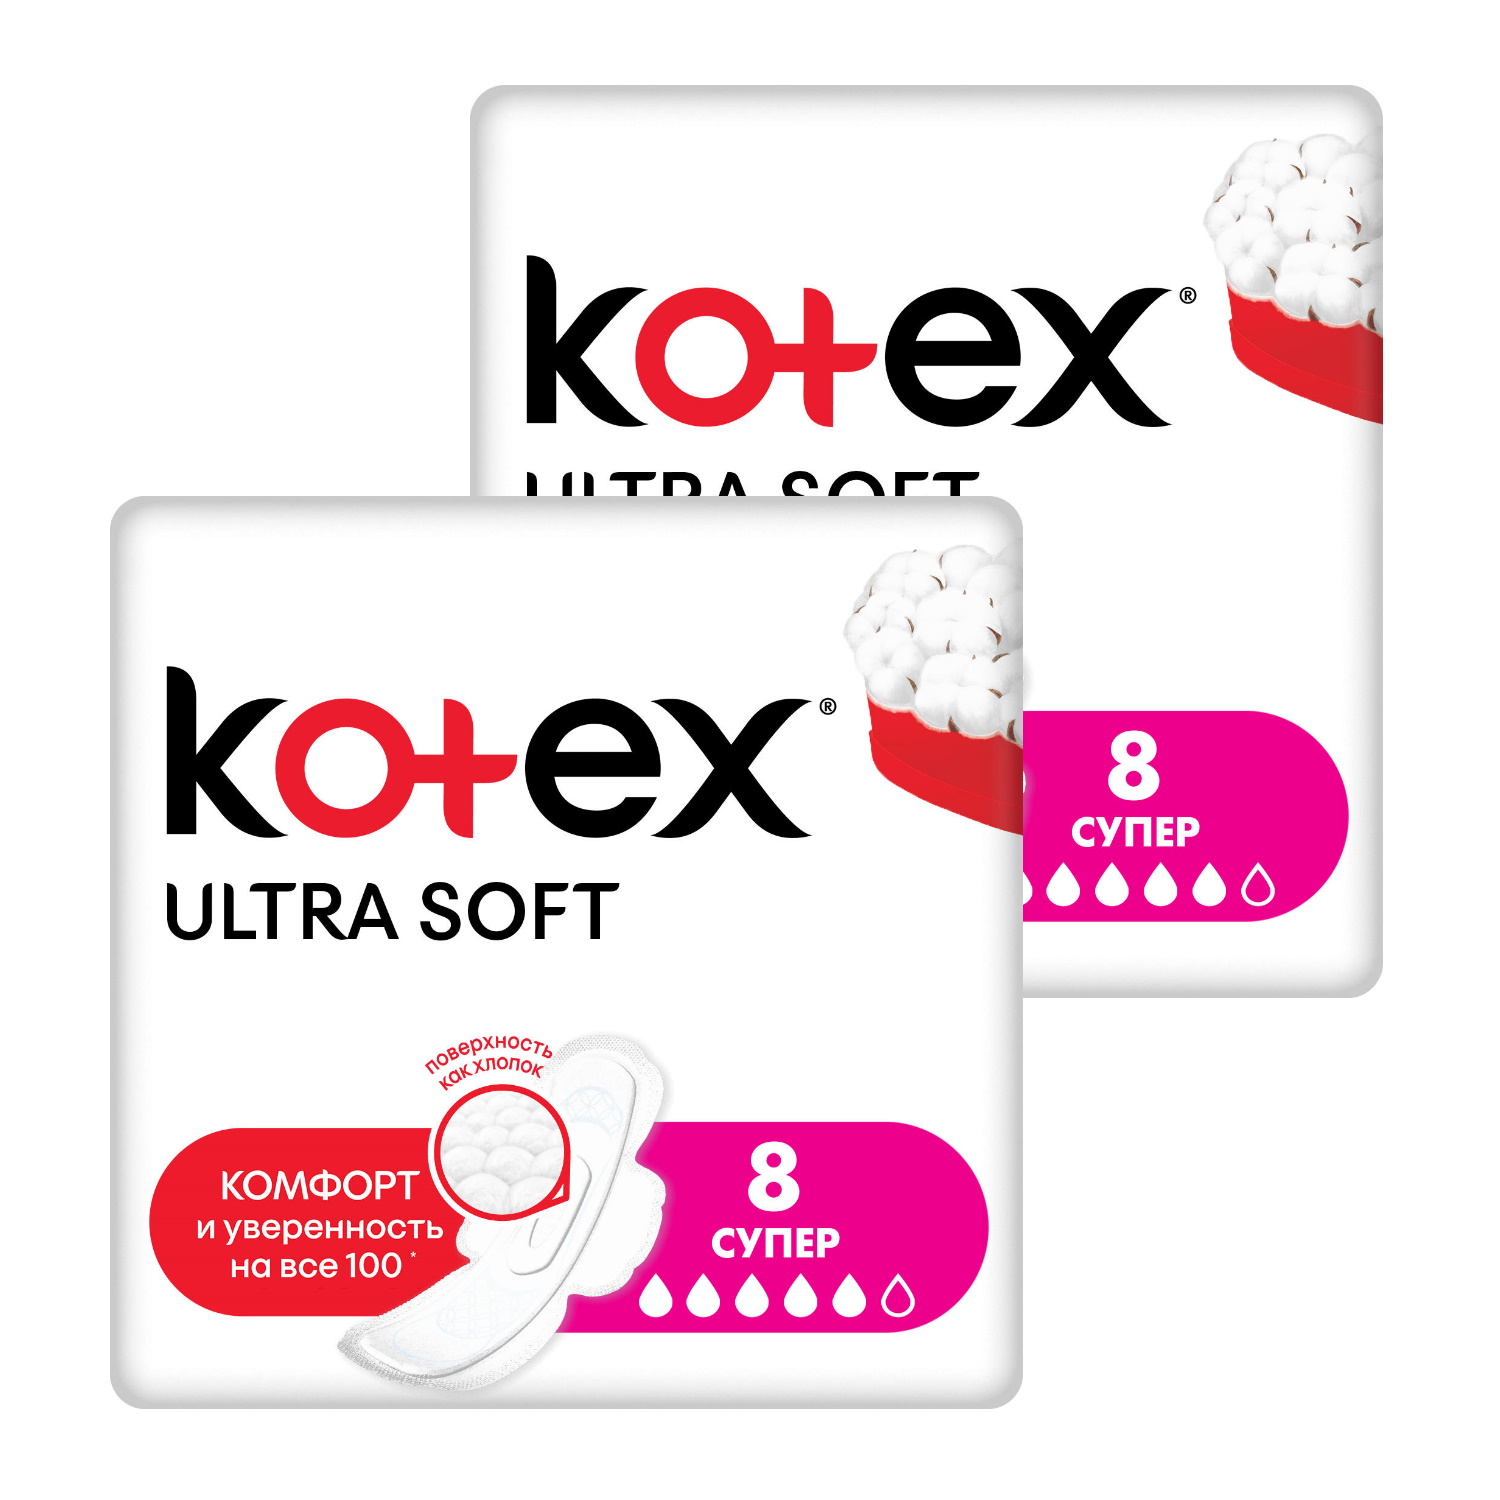 Прокладки гигиенические KOTEX Ультра Софт Супер, 8 шт (Набор из 2 штук) kotex ультра софт нормал прокладки 10 шт